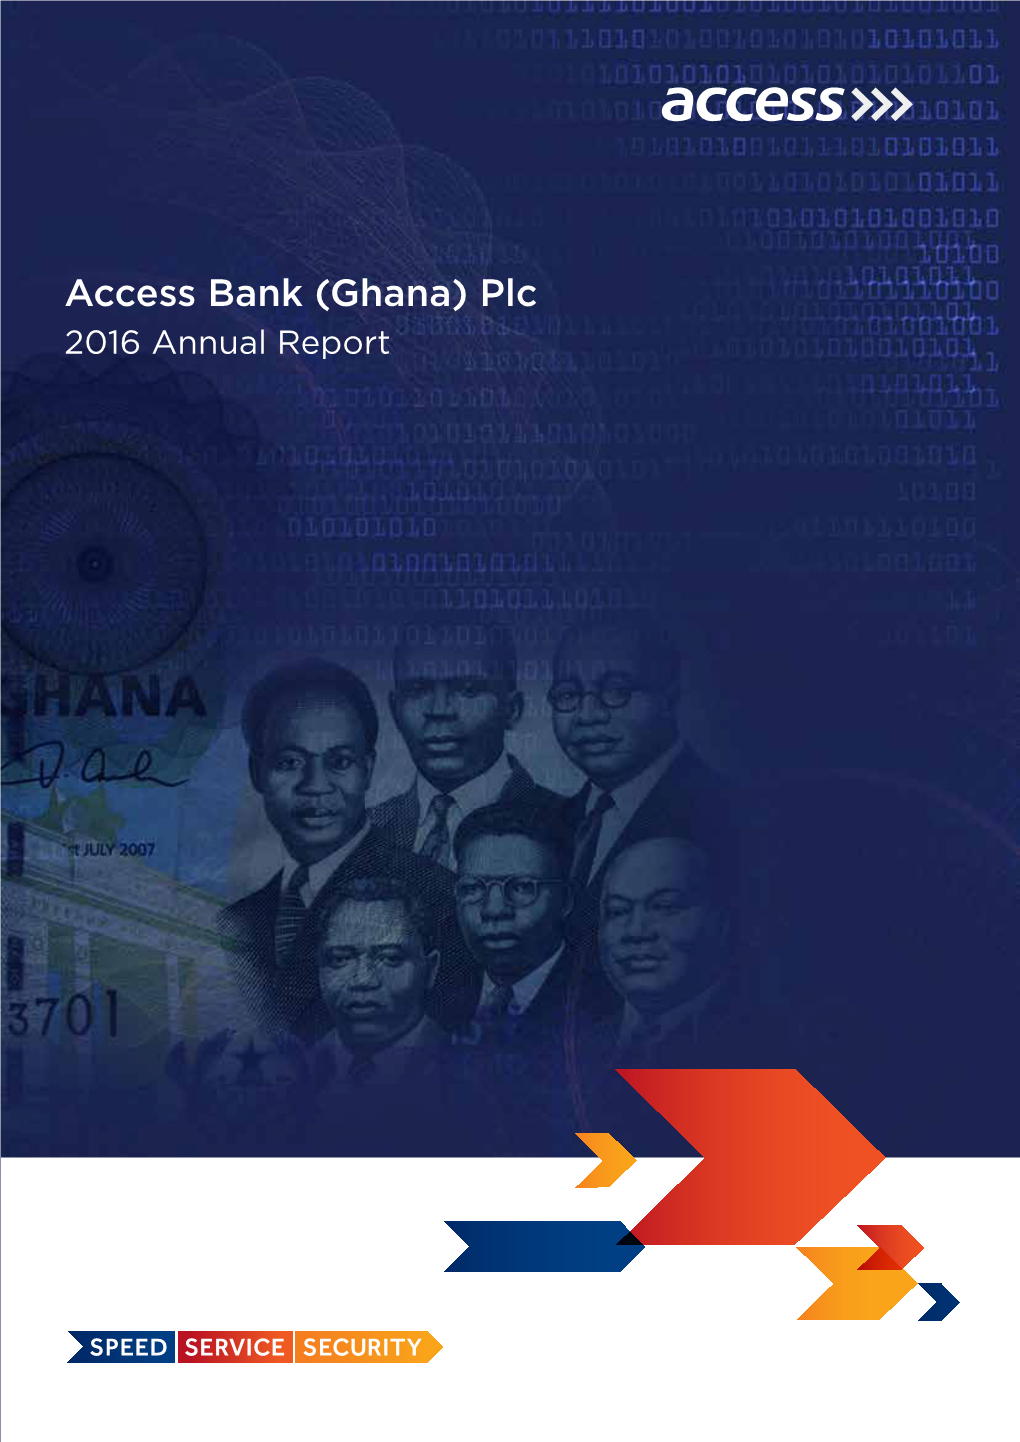 Access Bank (Ghana) Plc 2016 Annual Report